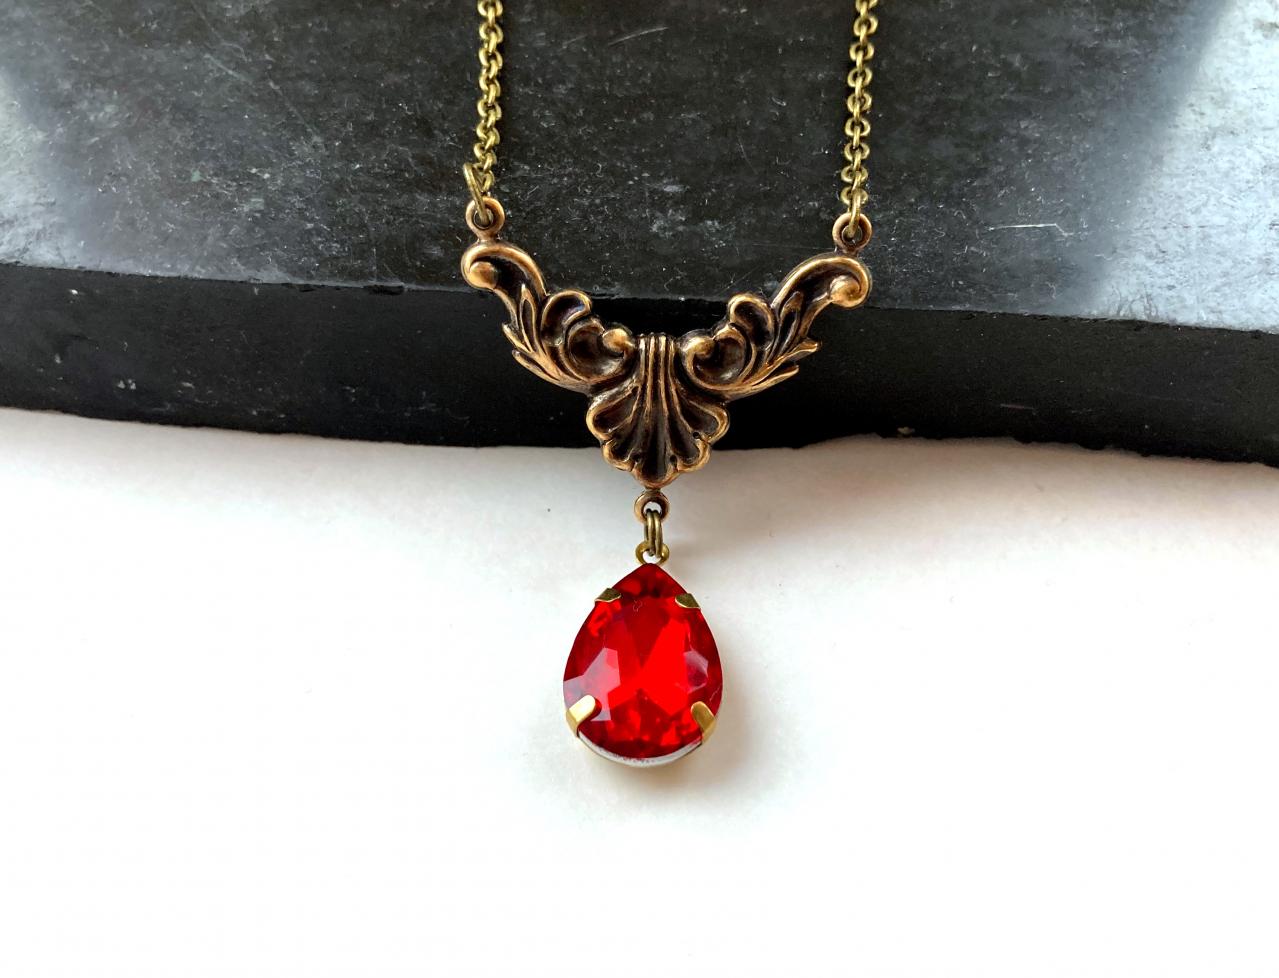 Art Nouveau necklace with a rubby red teardrop glass pendant, Selma Dreams